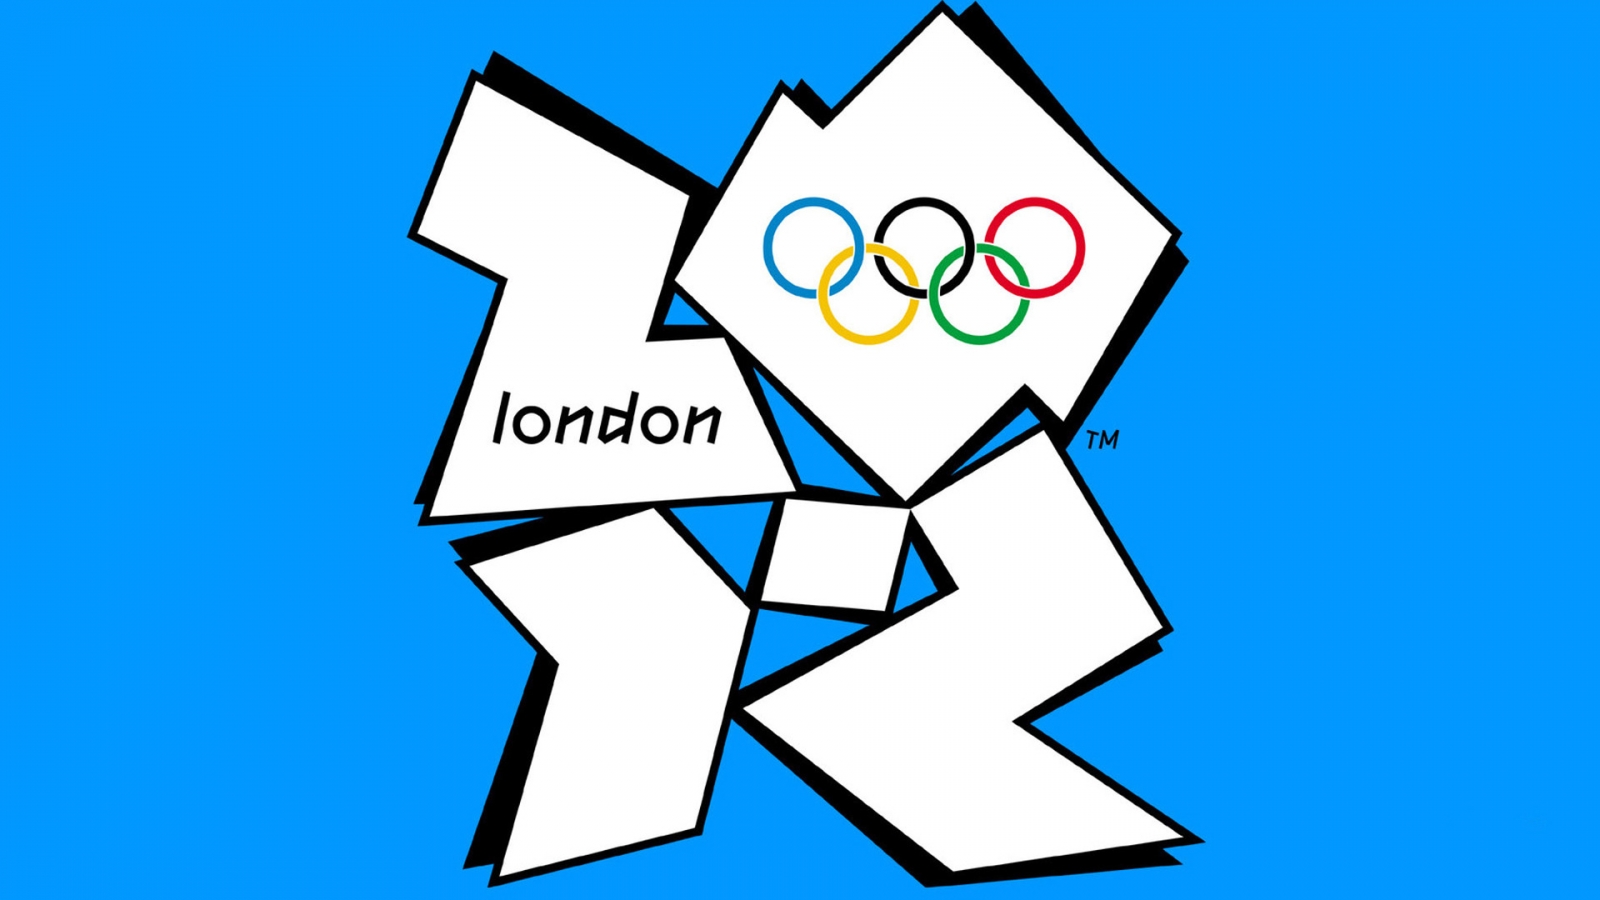 London 2012 Olympics Logo for 1600 x 900 HDTV resolution